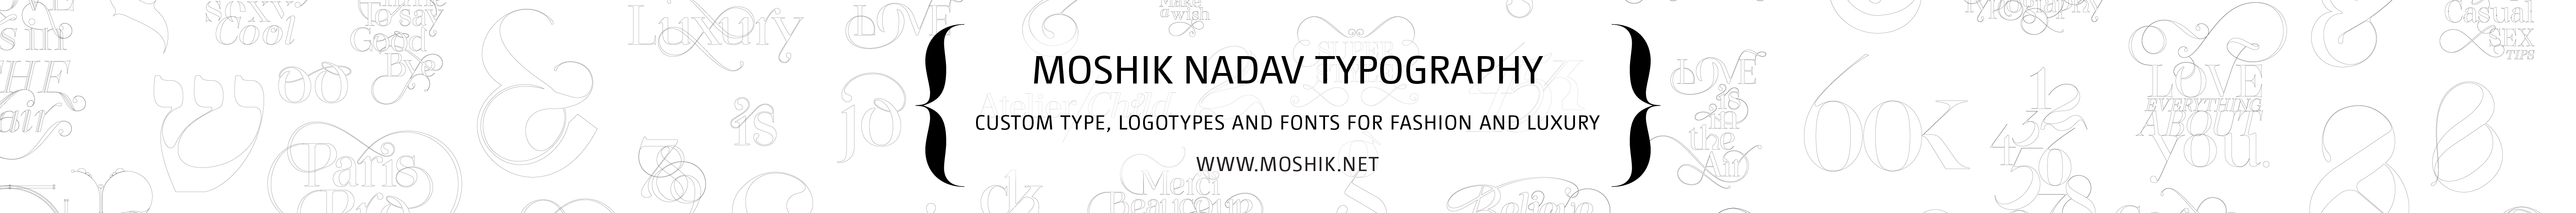 Moshik Nadav Typography's profile banner